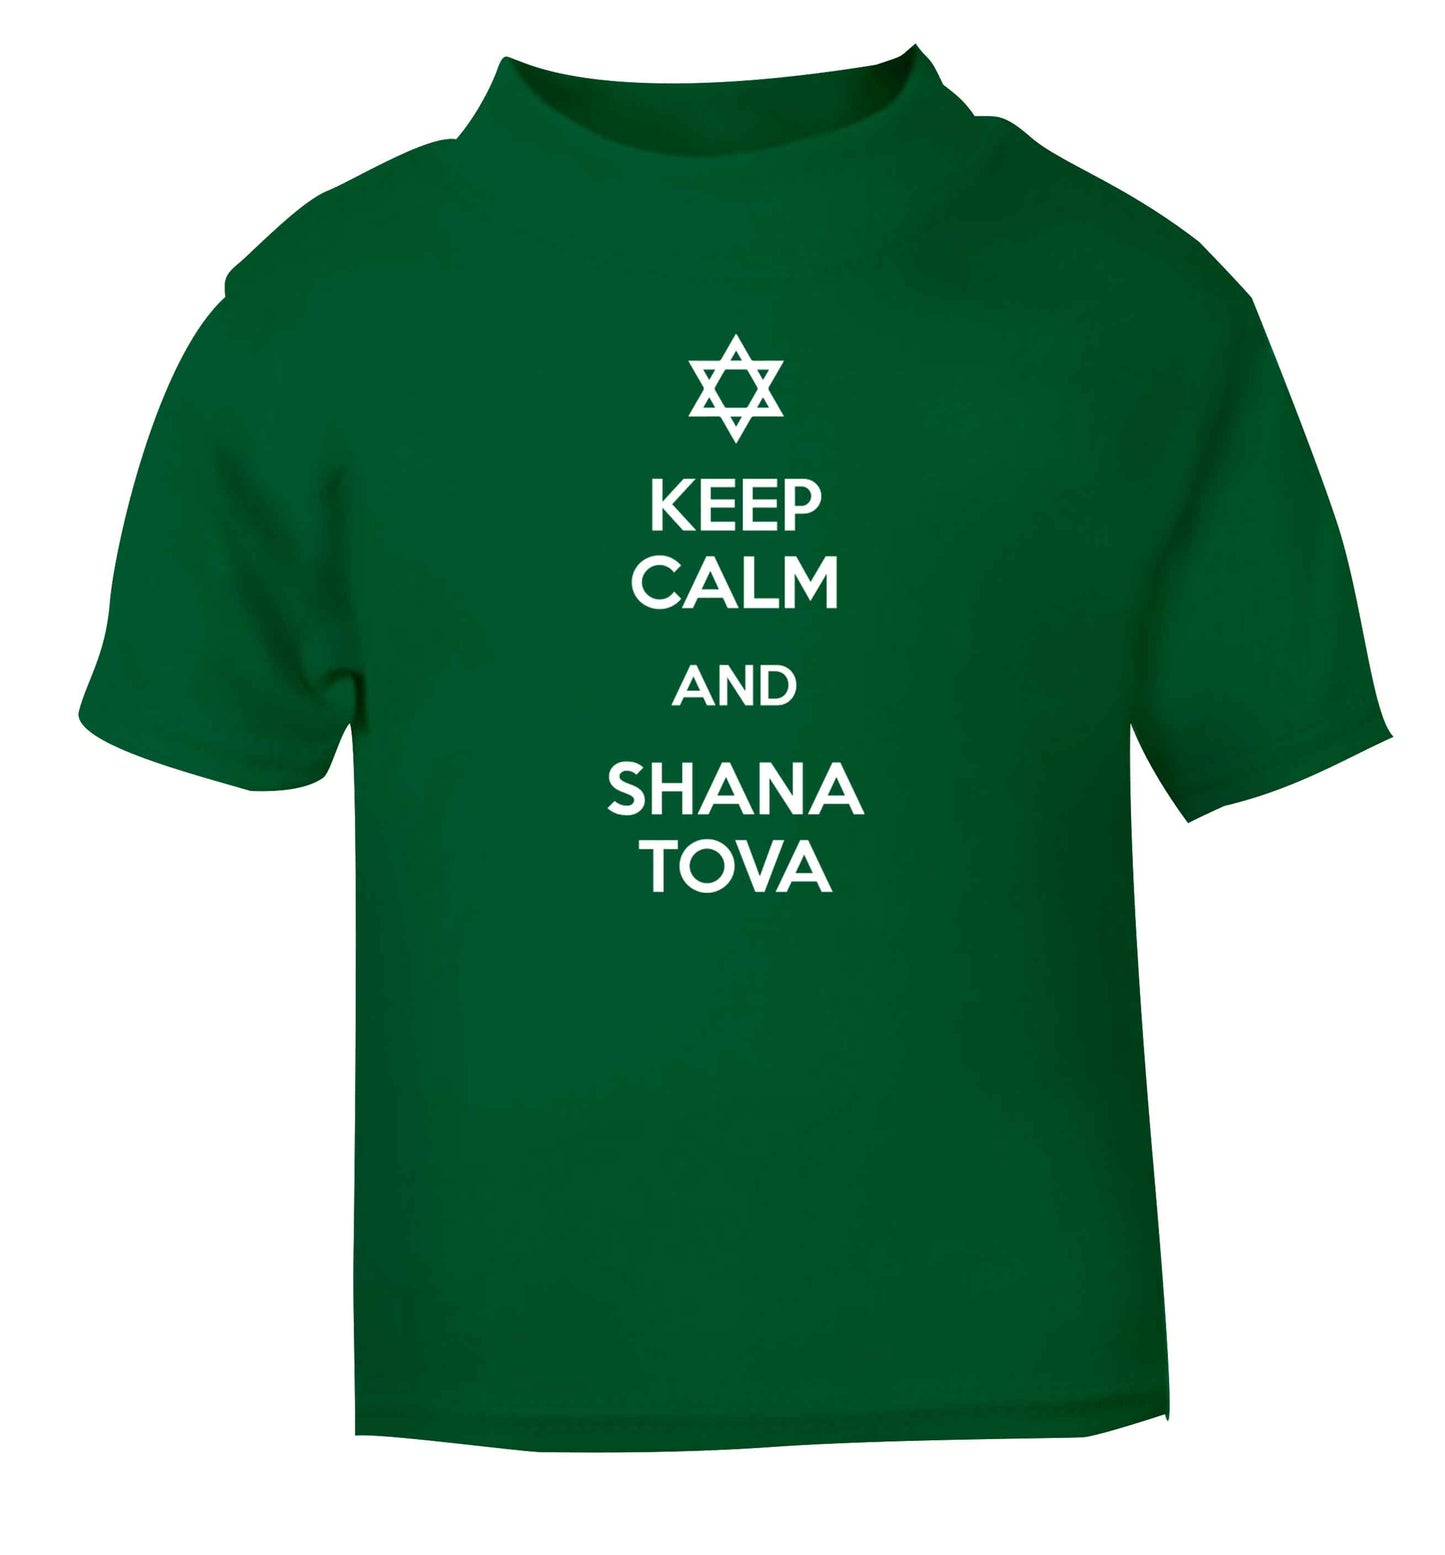 Keep calm and shana tova green Baby Toddler Tshirt 2 Years